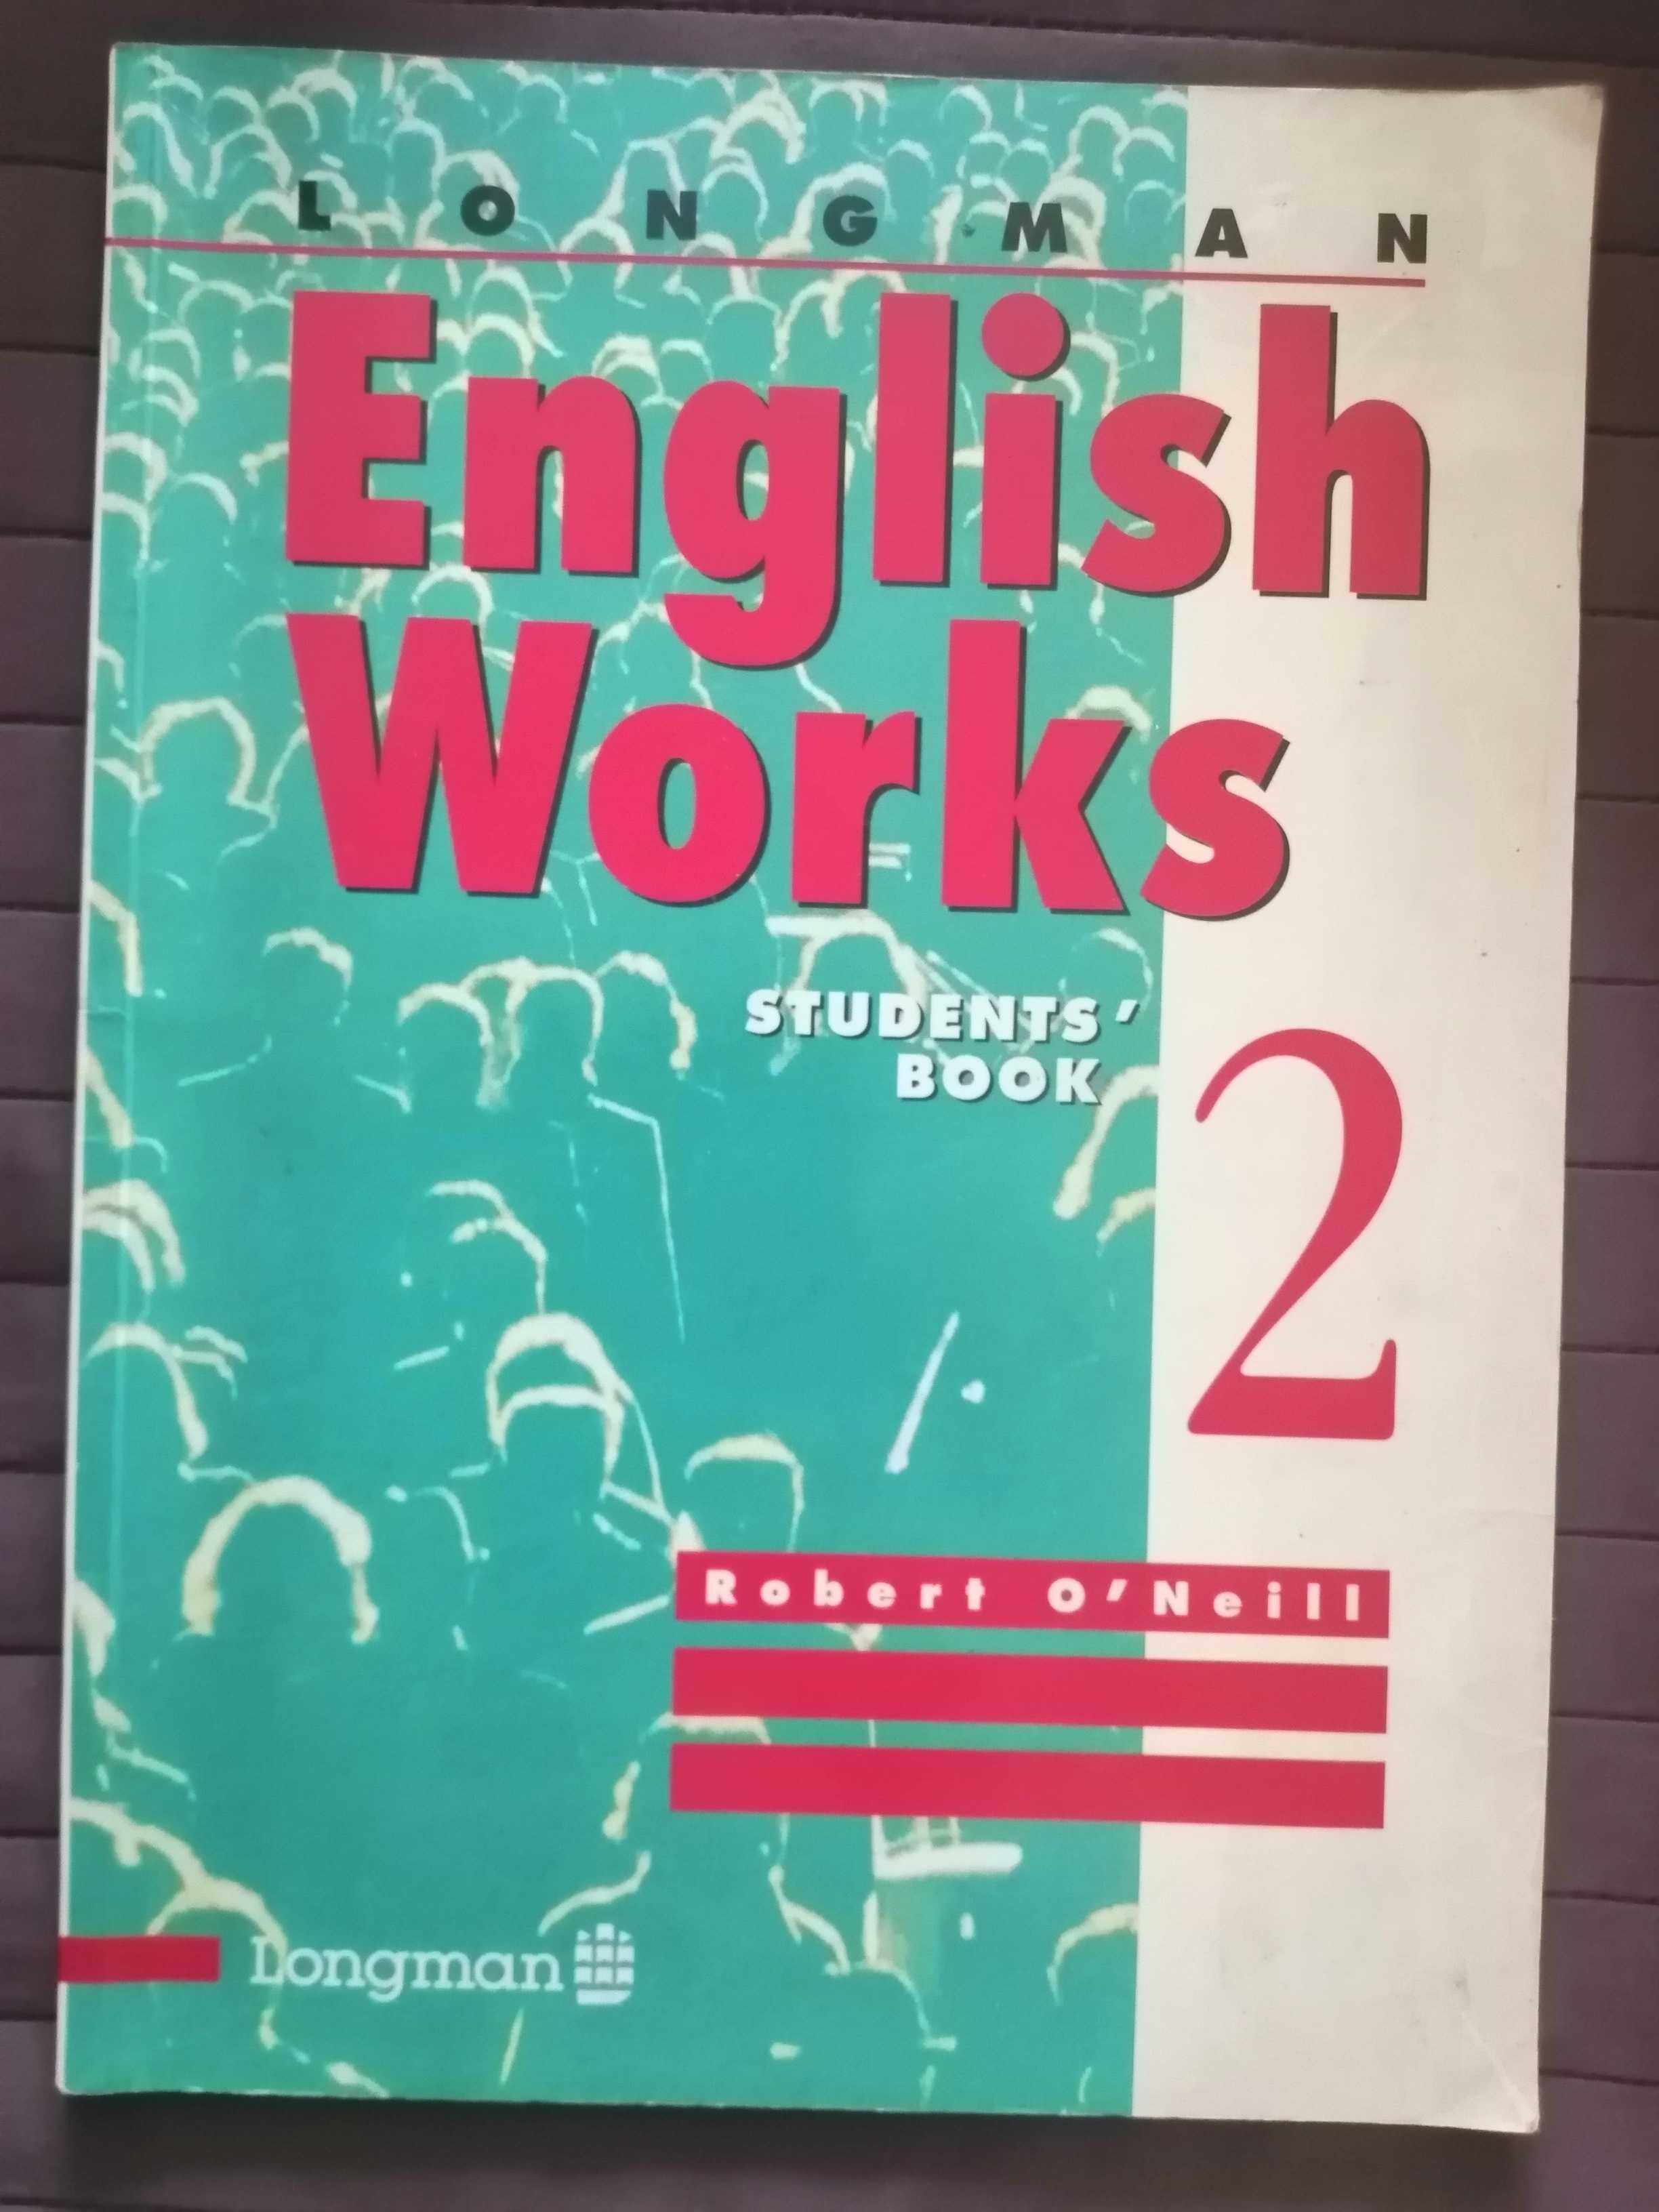 English works 2 Robert O'Neil students book Longman Angielski